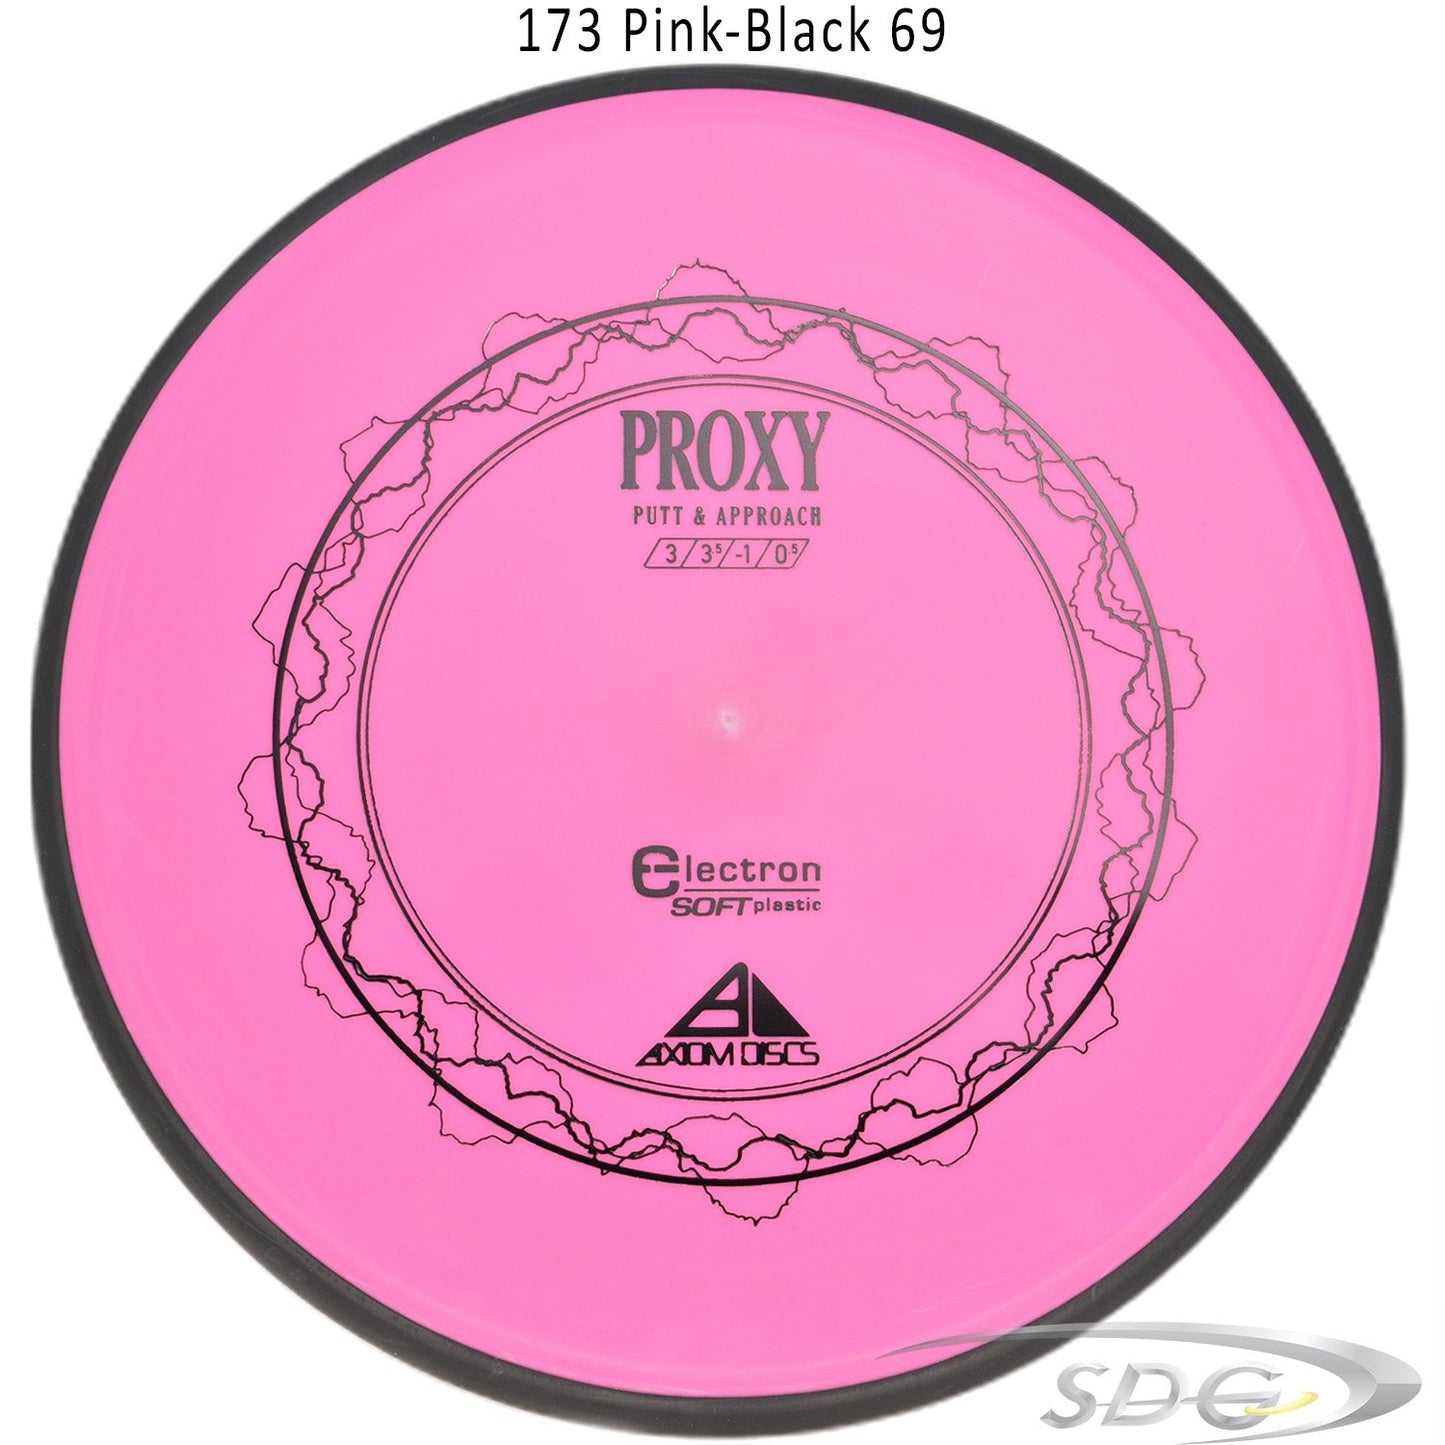 axiom-electron-proxy-soft-disc-golf-putt-approach 173 Pink-Black 69 